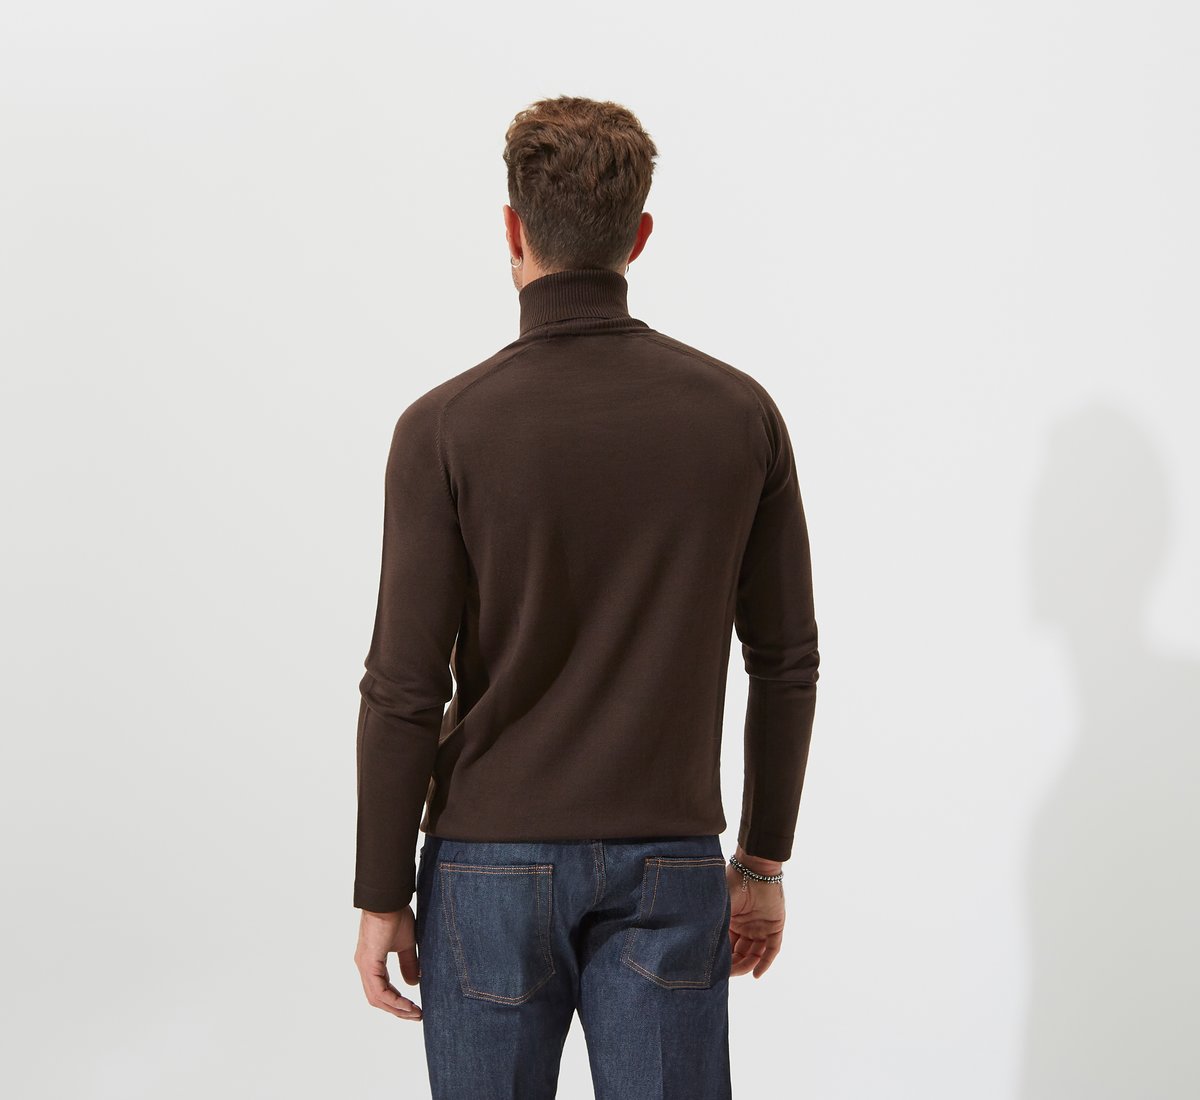 Brown turtleneck sweater